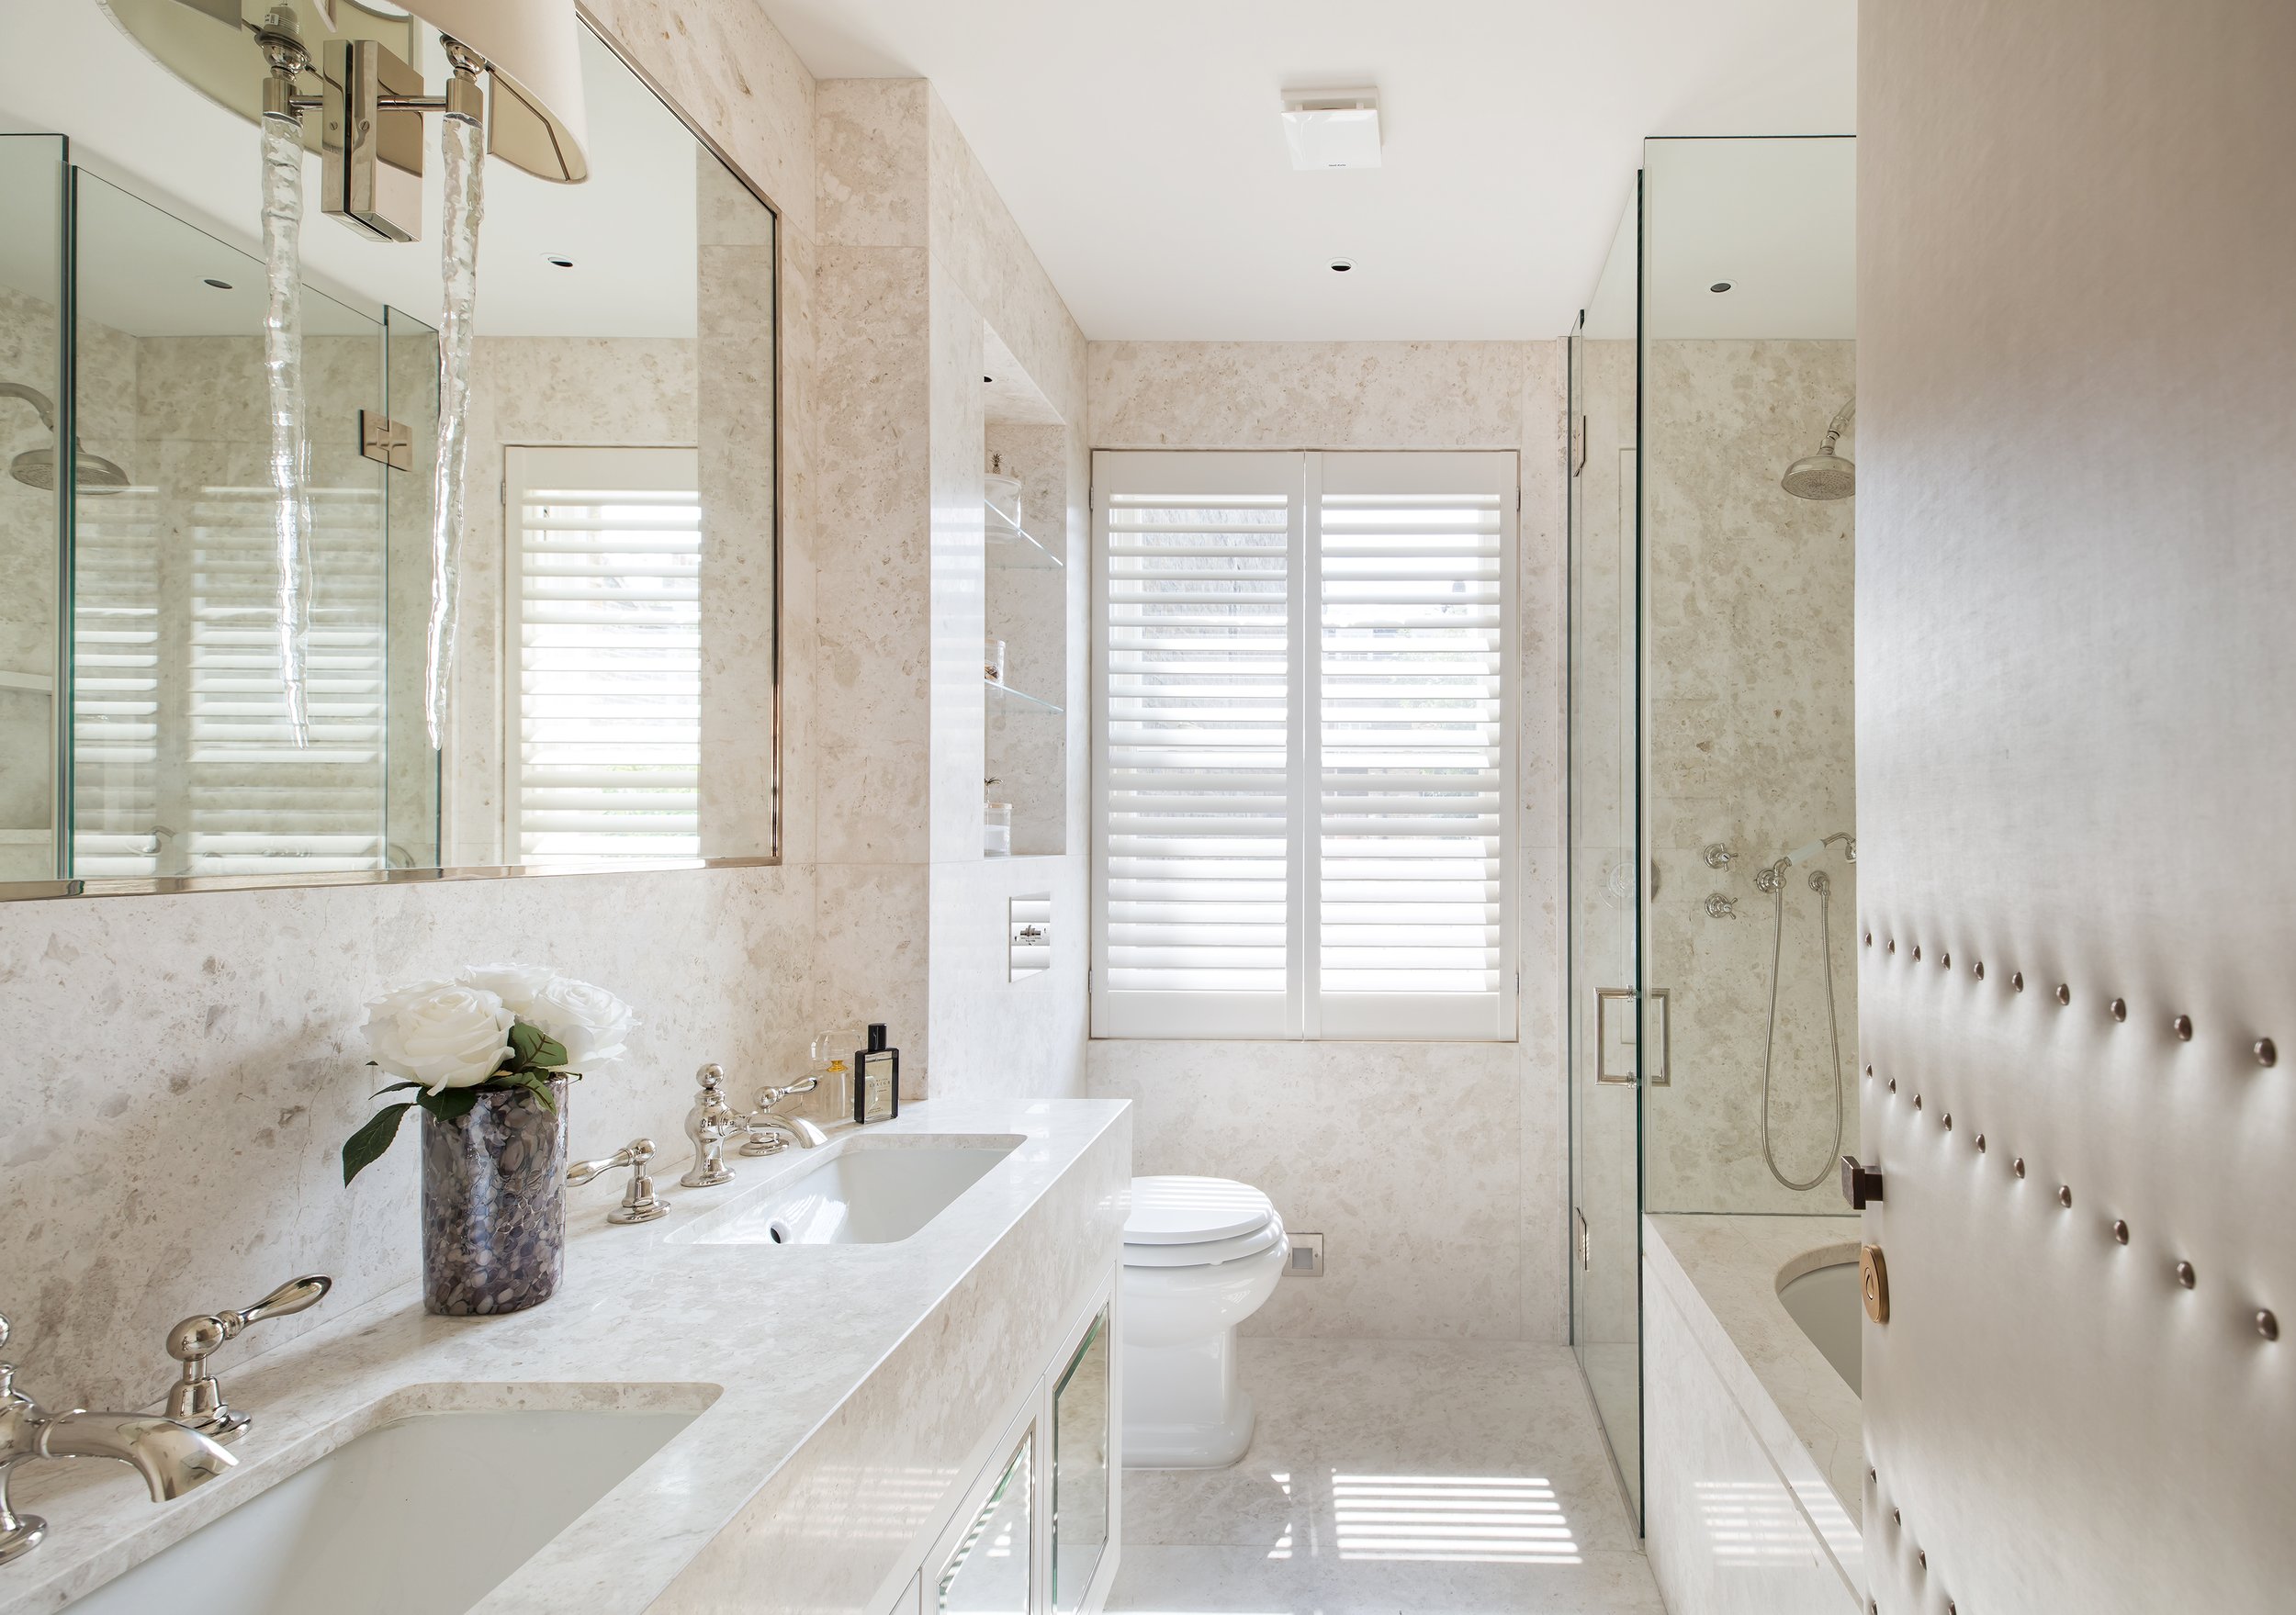 Stunning Chelsea bathroom design by leading interior designer Juliette Byrne